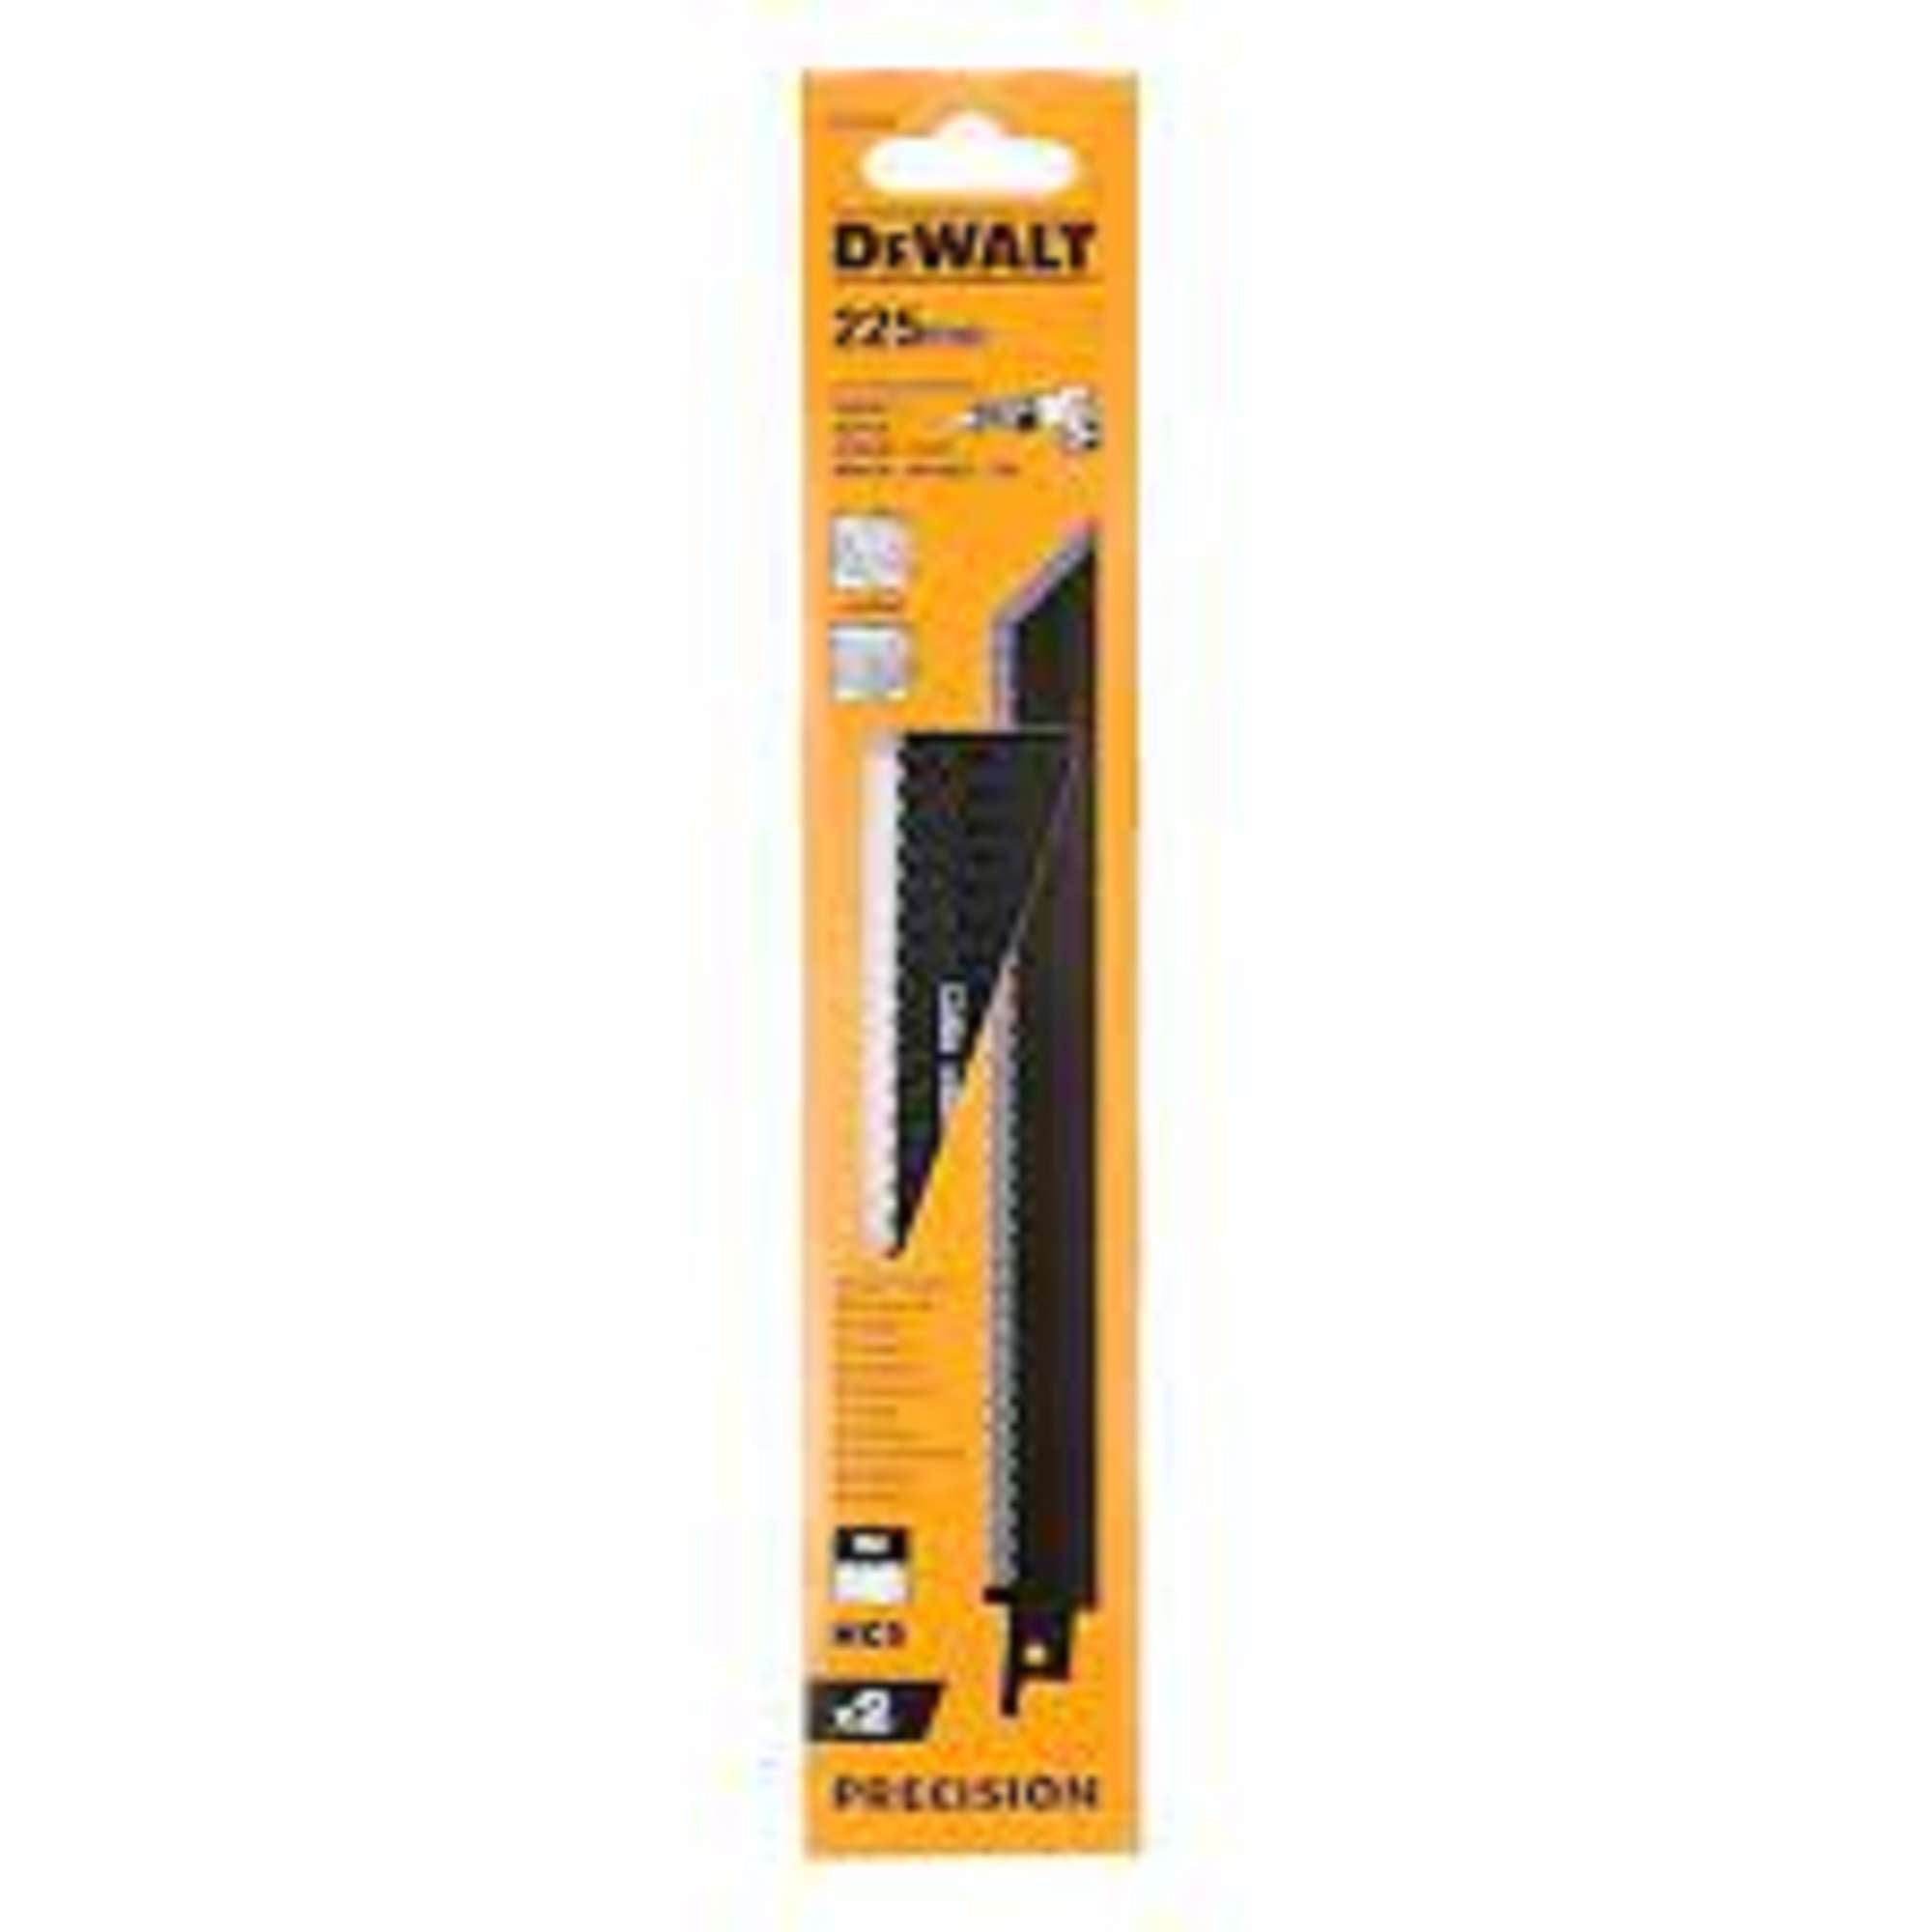 DEWALT DT20437-QZ 102mm carbide tooth universal saw blade